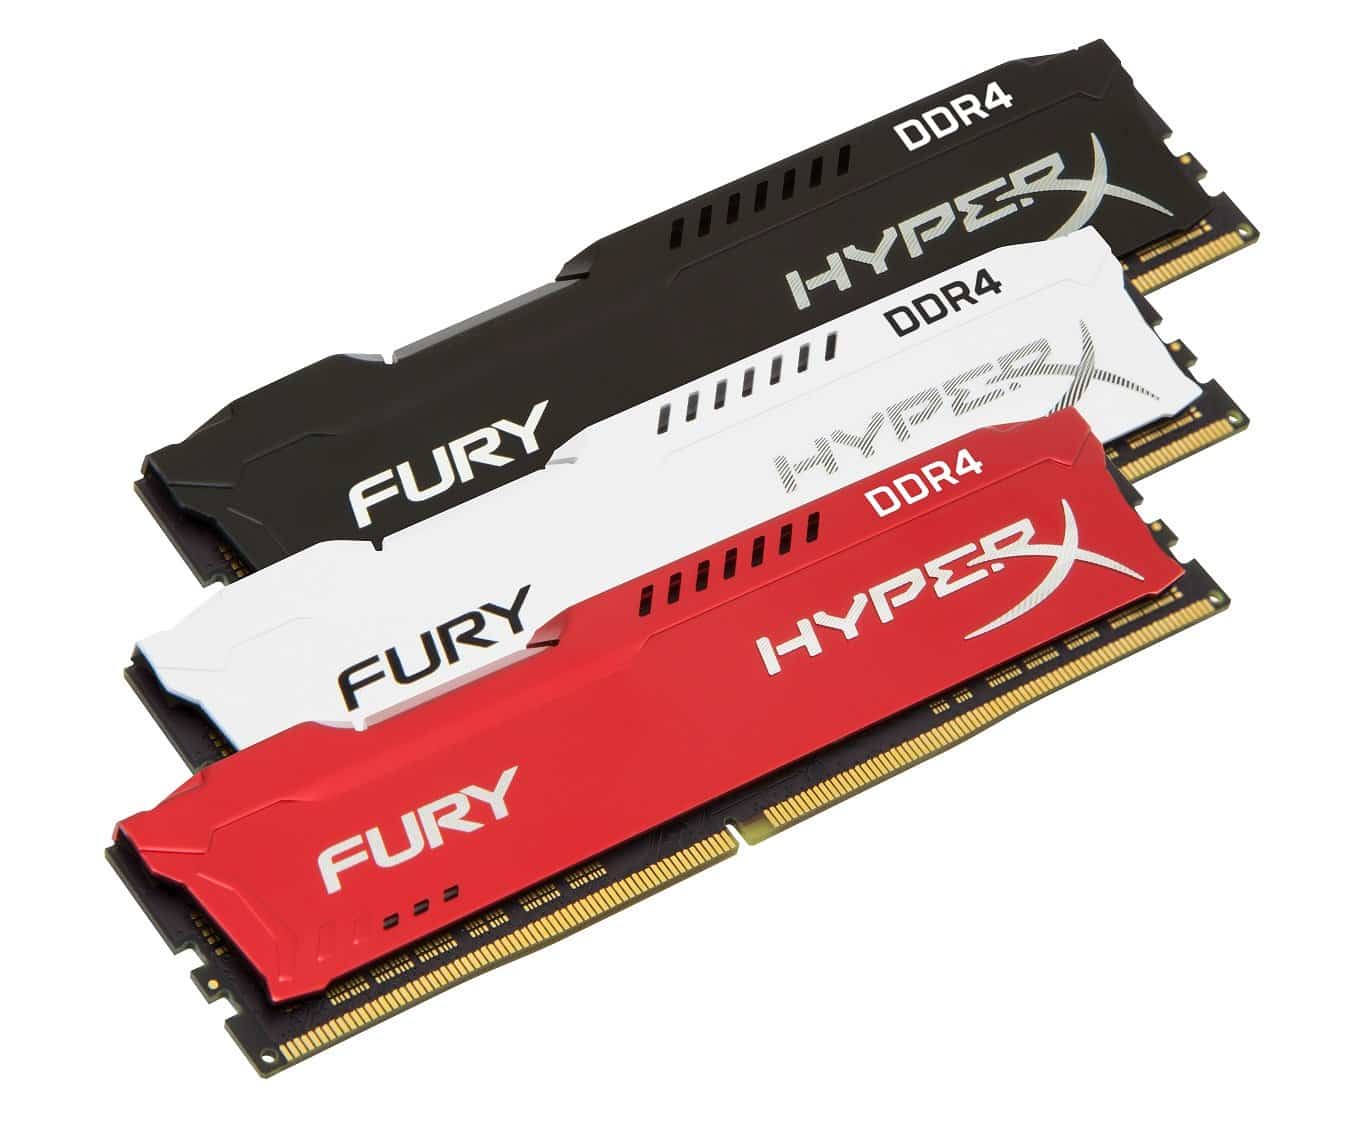 HyperX обновила линейку модулей ОЗУ FURY DDR4 с автоматическим разгоном (HyperX FURY DDR4 Family 1)